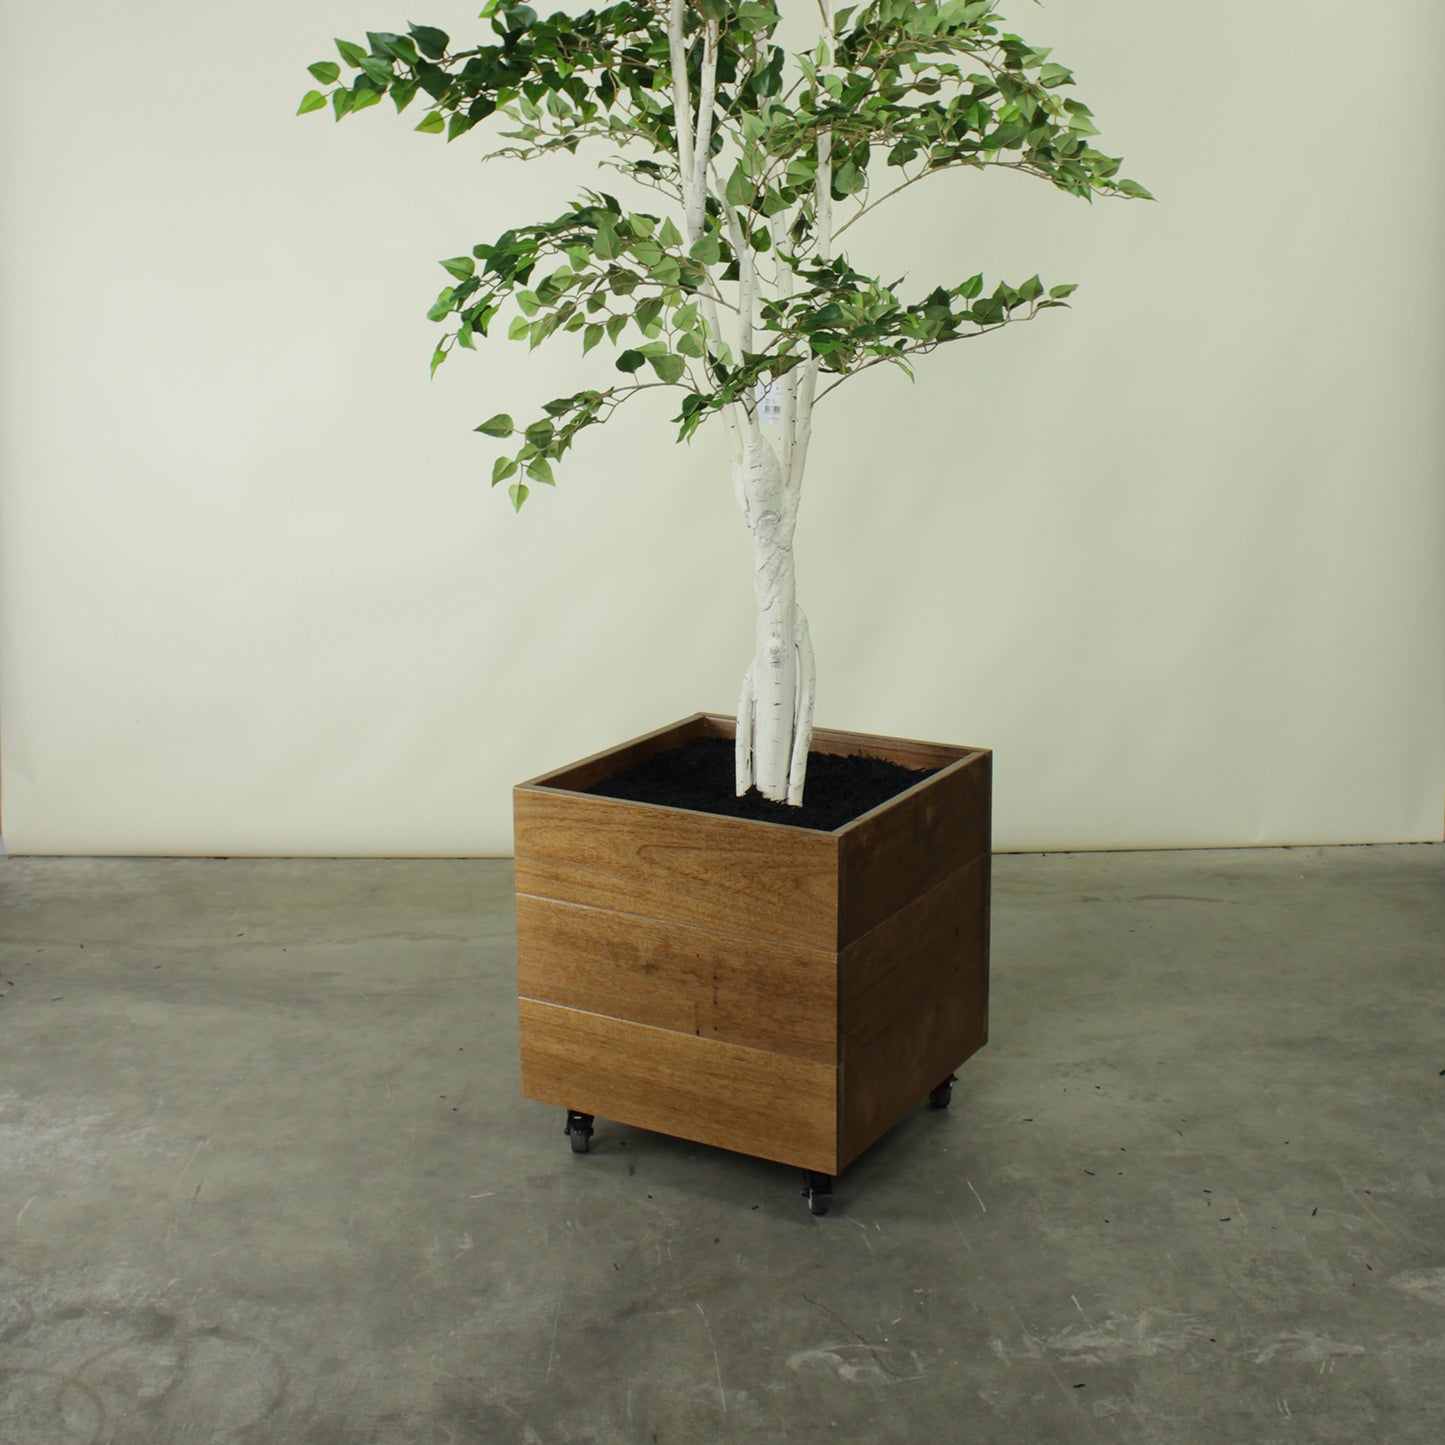 Hardwood Planter Pot with Trees